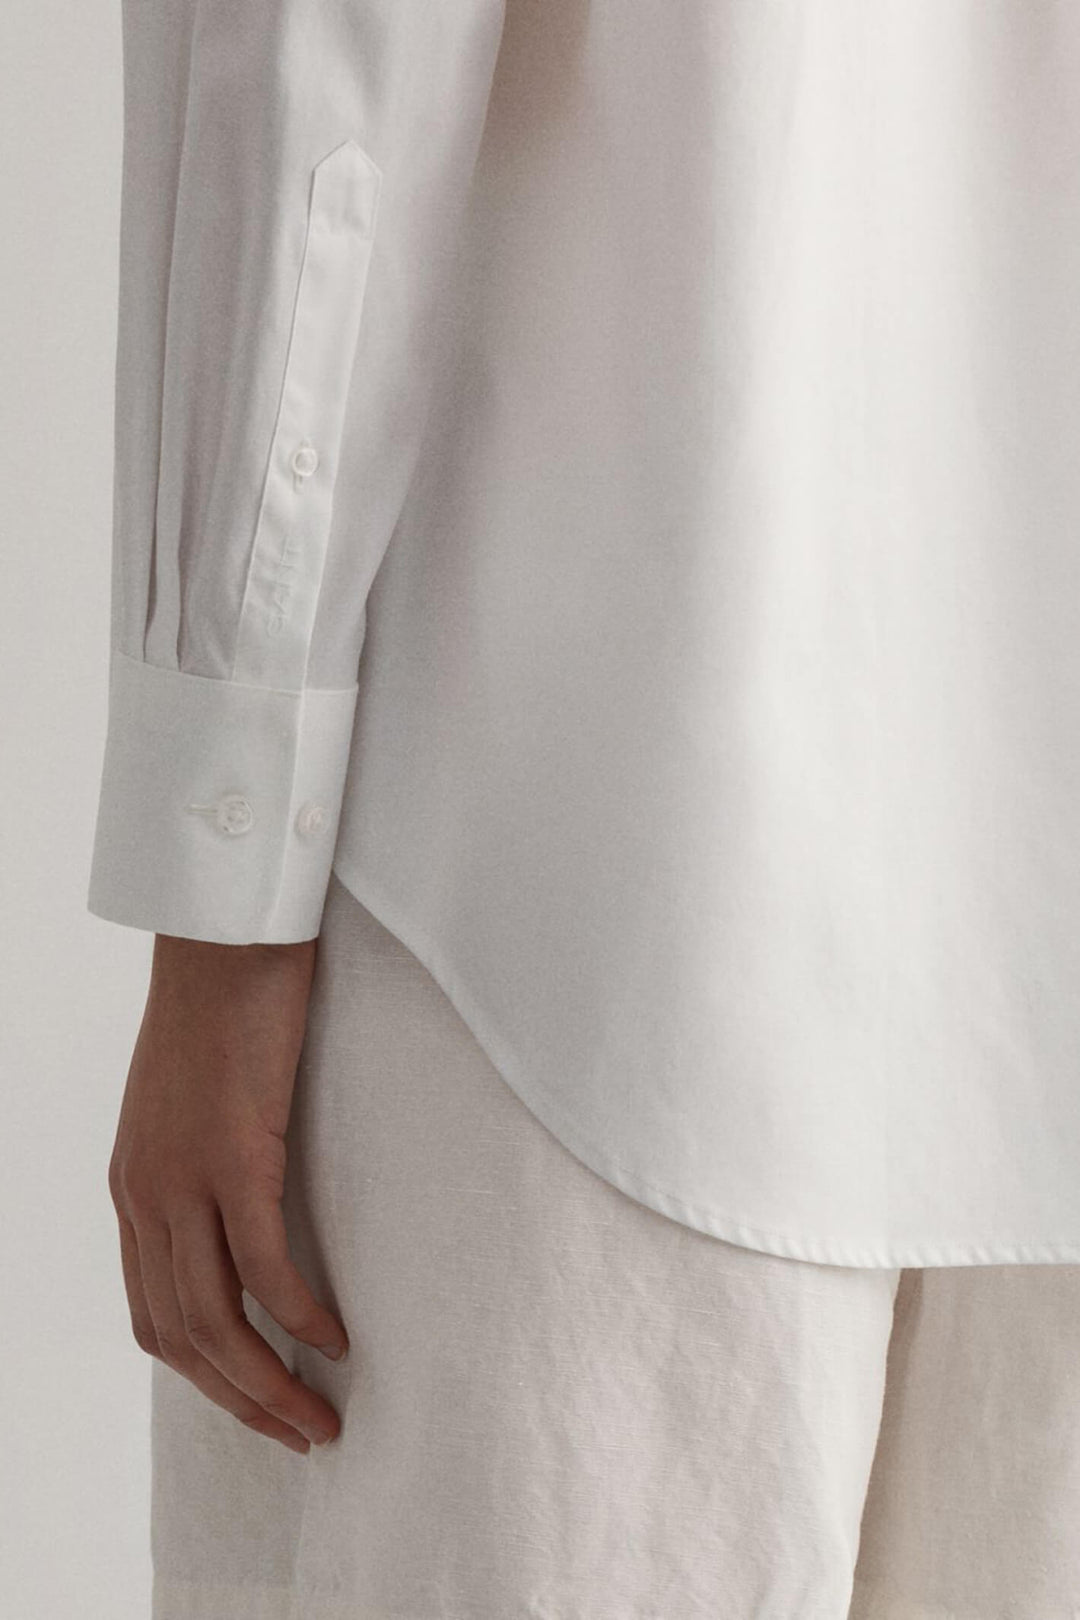 Gant 4300030 White Relaxed Fit Pinpoint Oxford Boyfriend Shirt - Shirley Allum